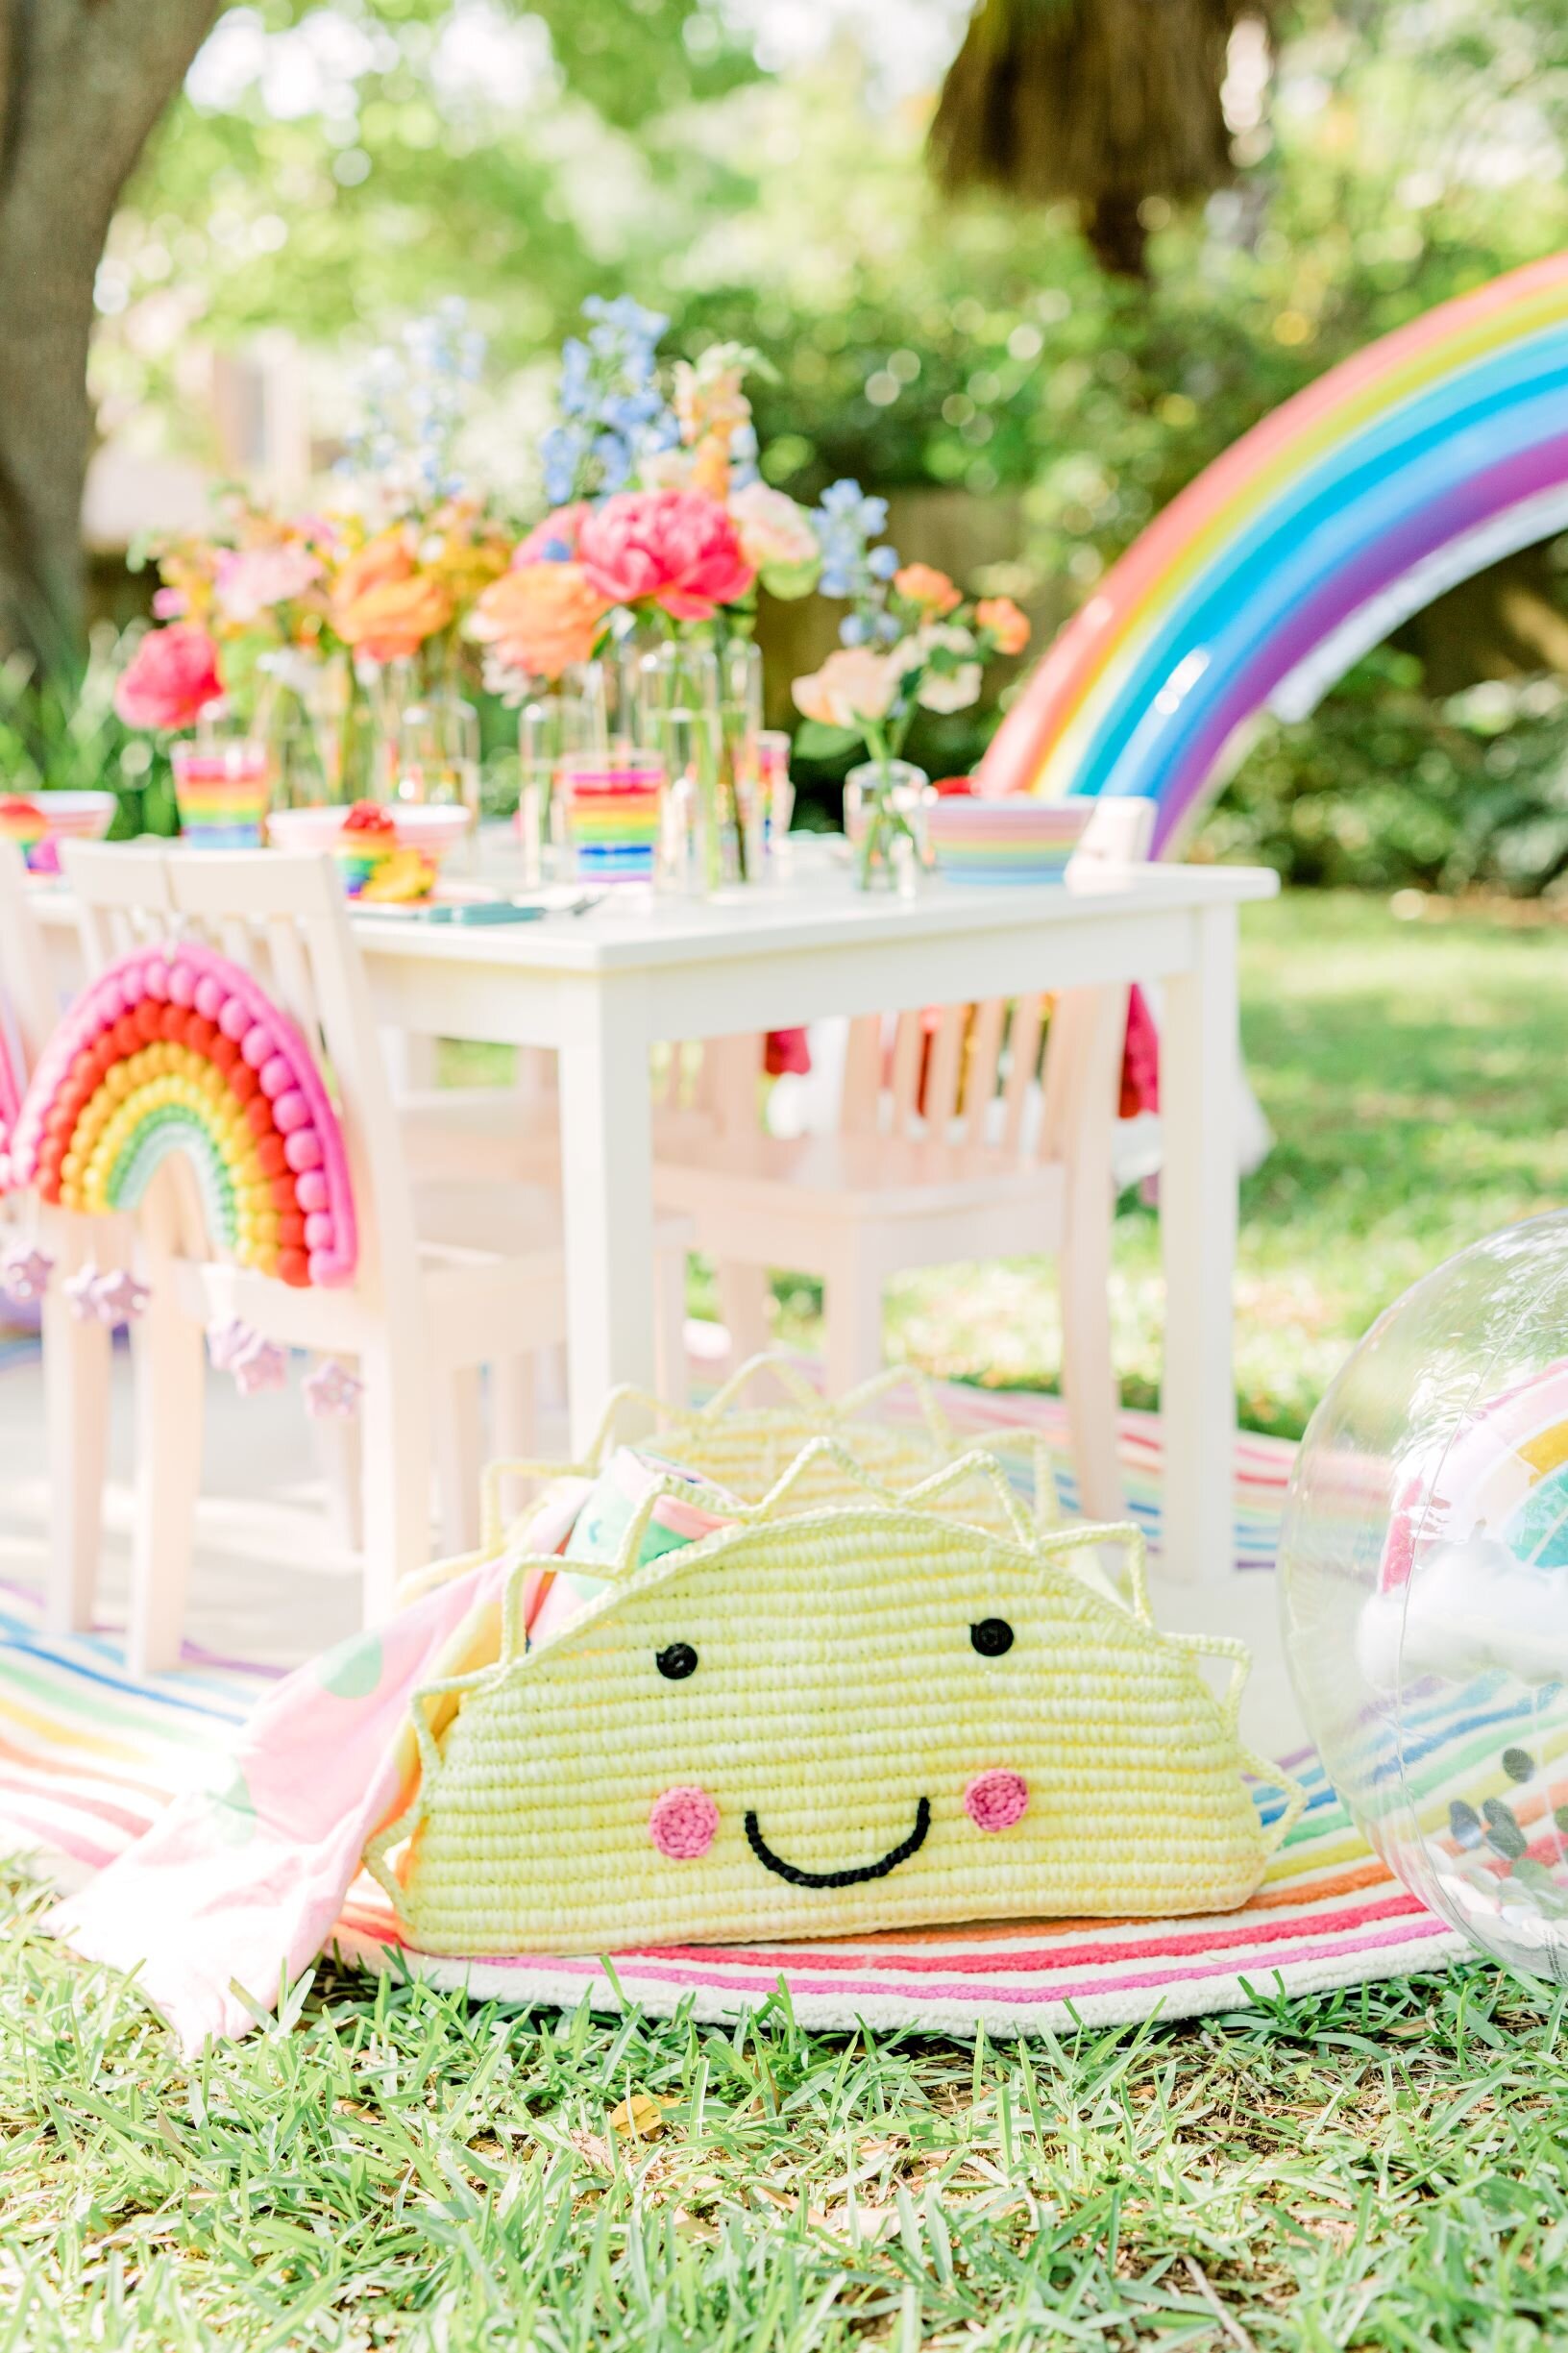 Summer Sunshine and Rainbow Kid Styled Backyard Picnic Splash Fun